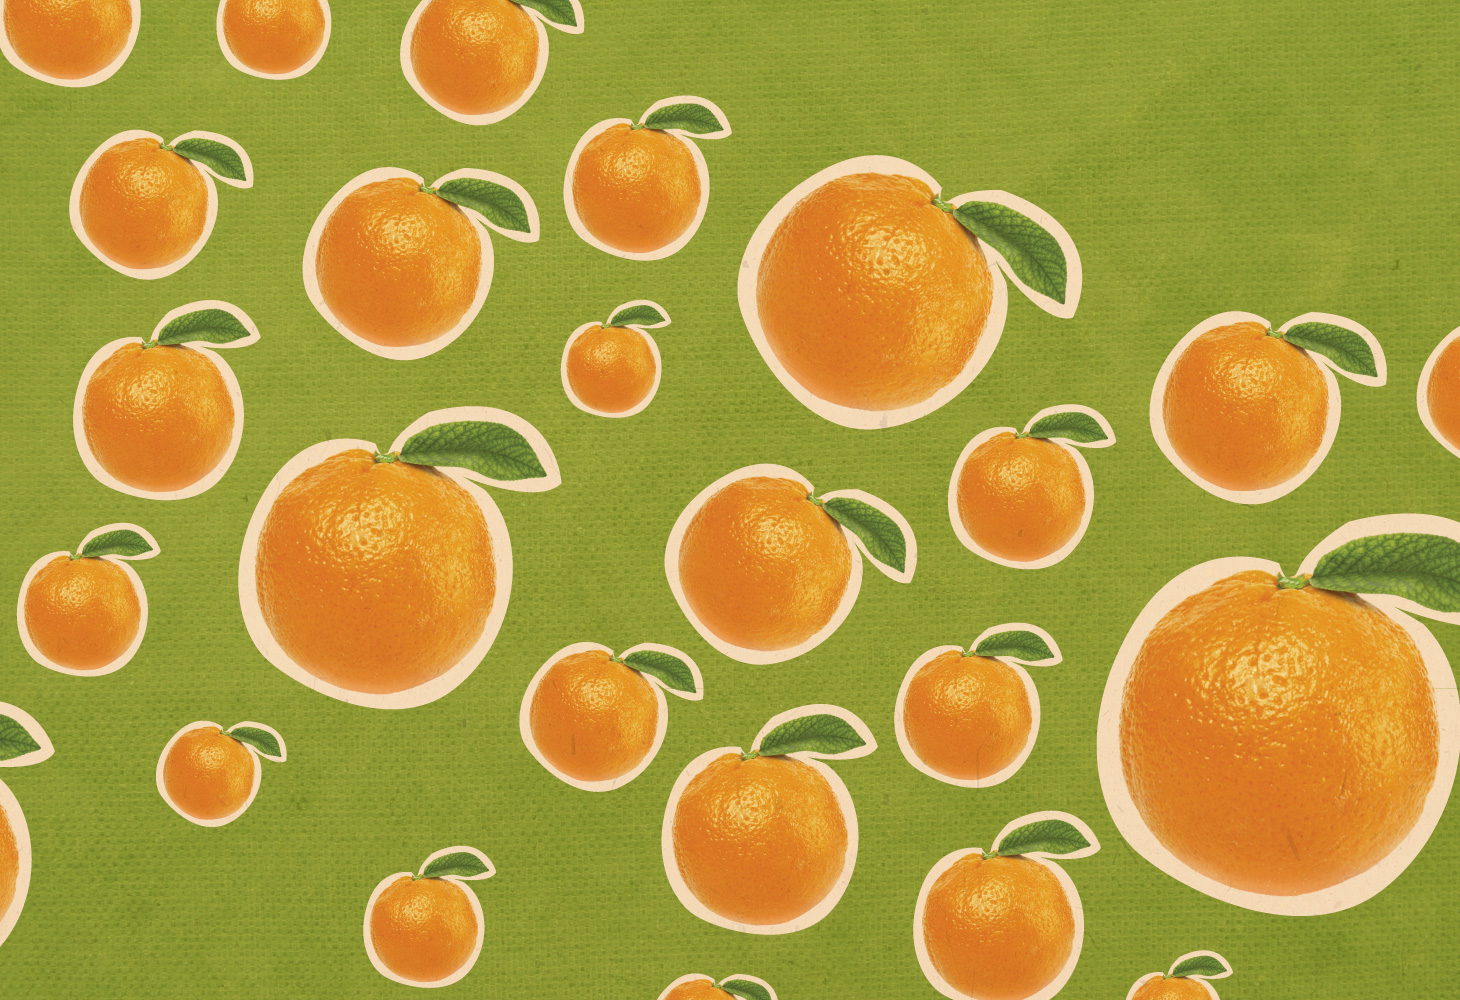 Fruit Salad - Illustrations - Oranges